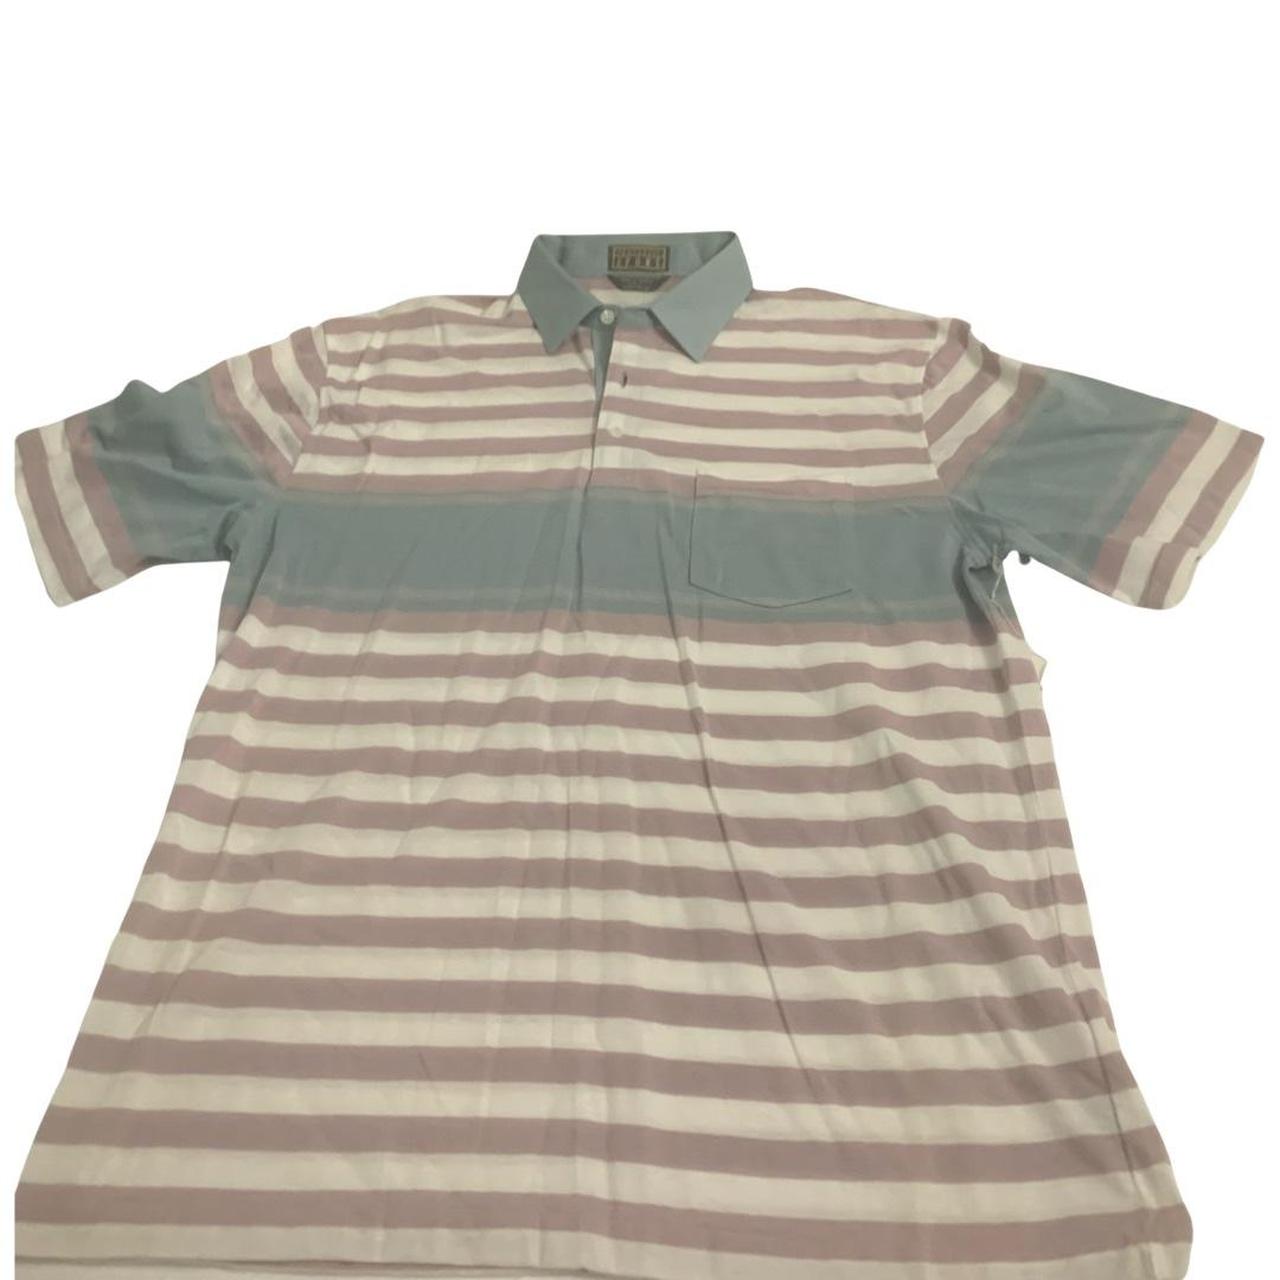 Product Image 1 - Mens multicolored striped vintage Sansabelt